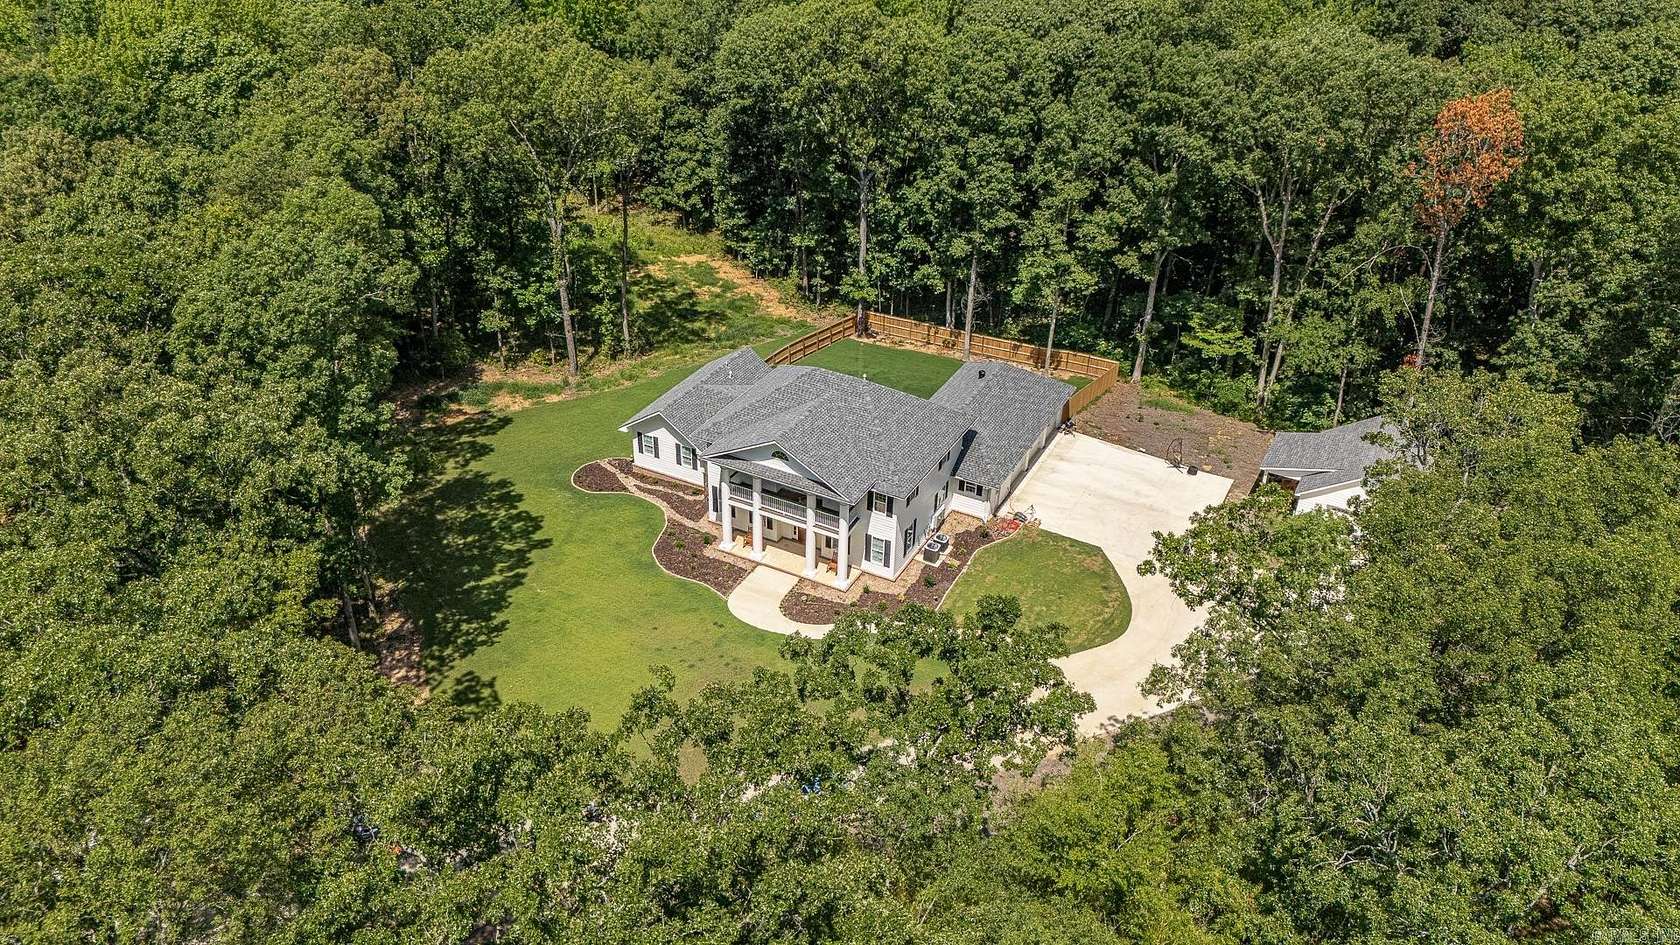 6.6 Acres of Residential Land with Home for Sale in Jonesboro, Arkansas